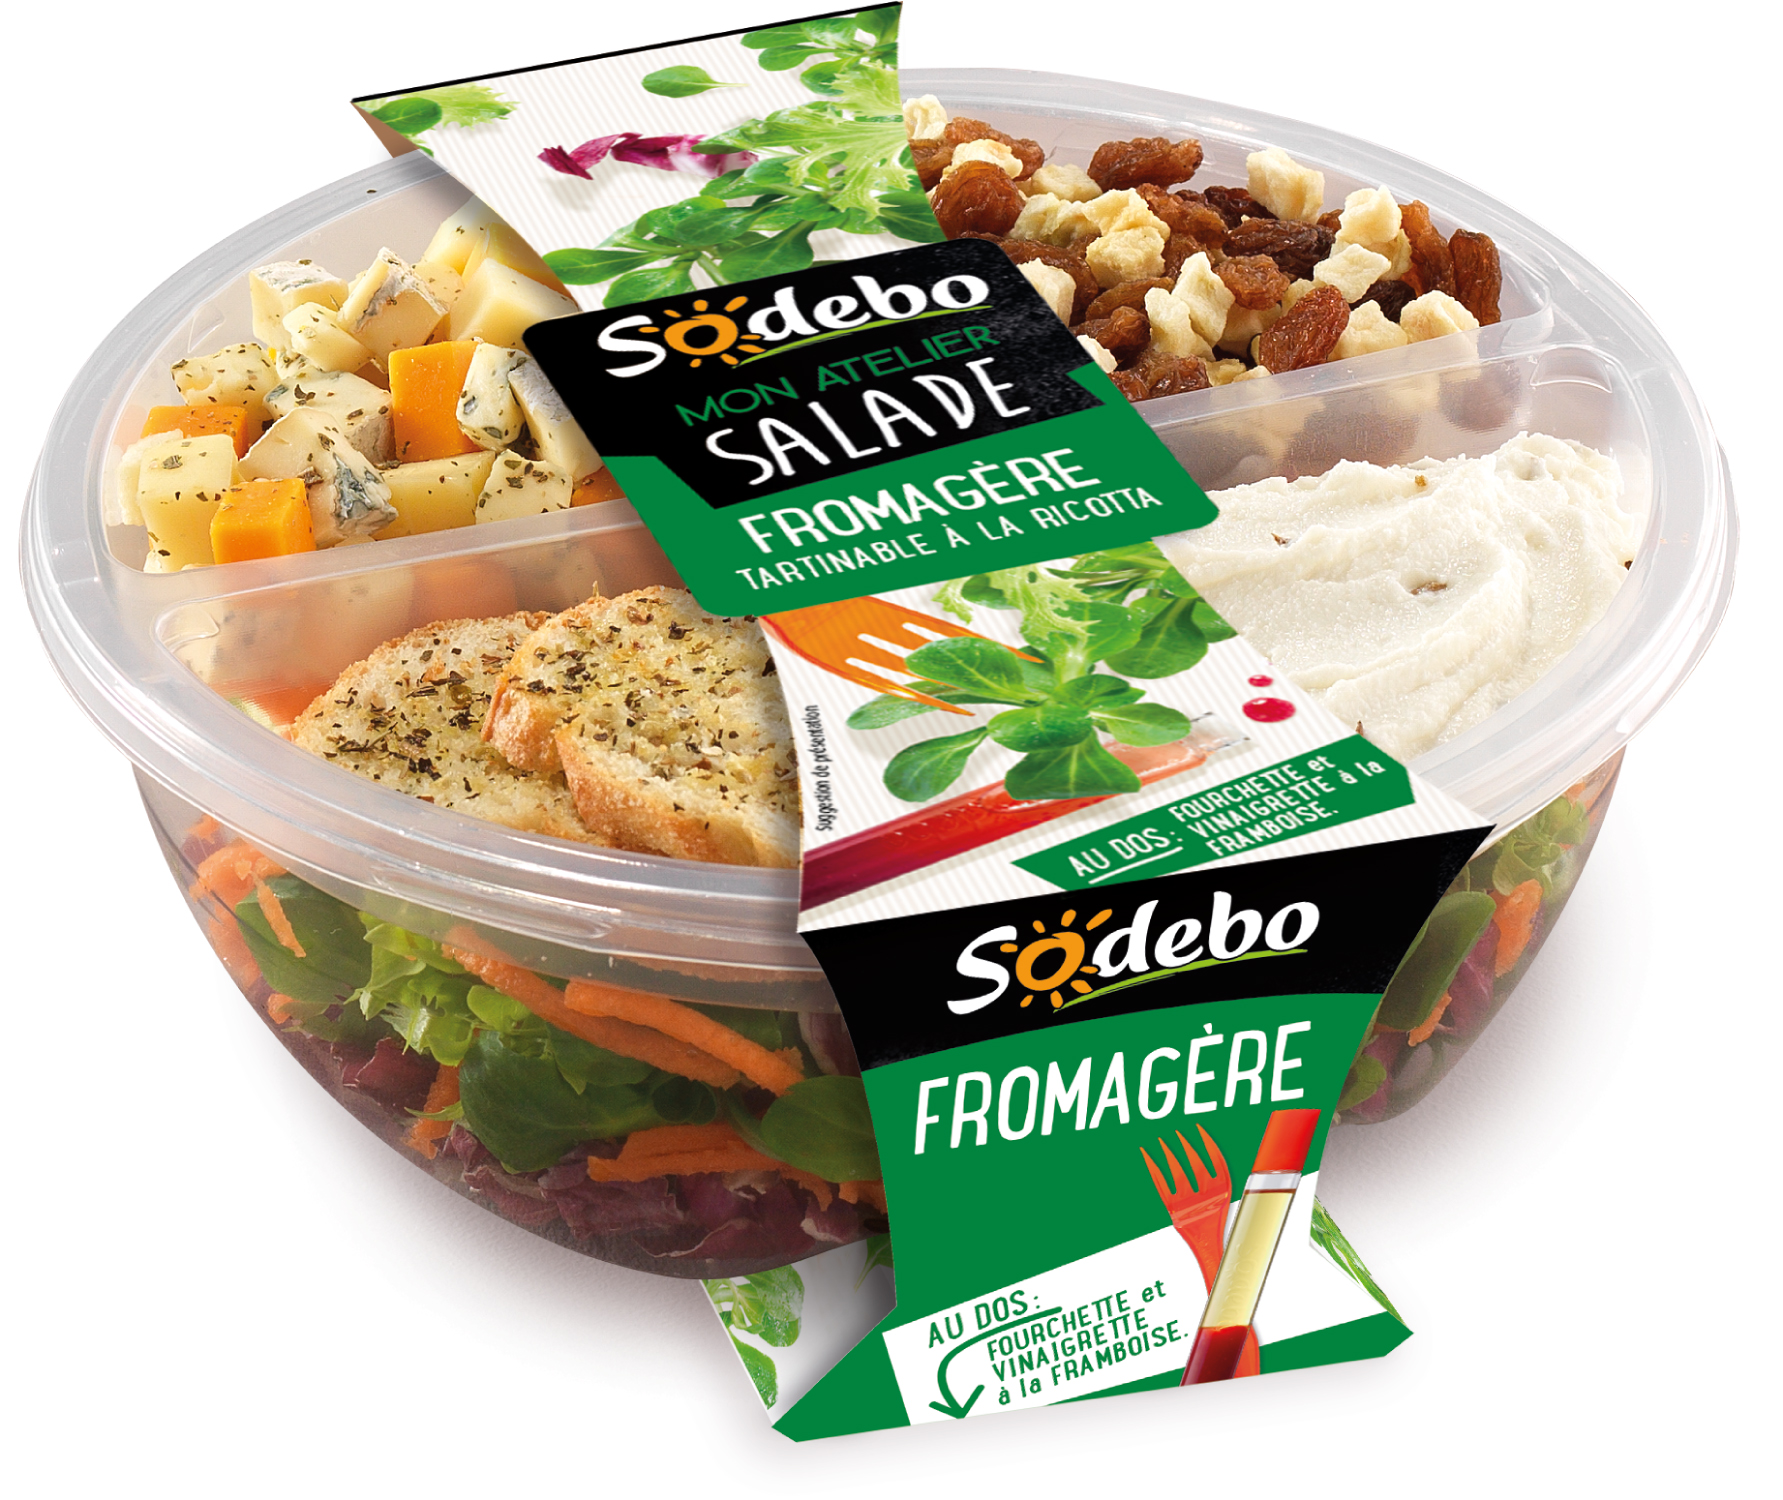 sodebo-Mon atelier salade